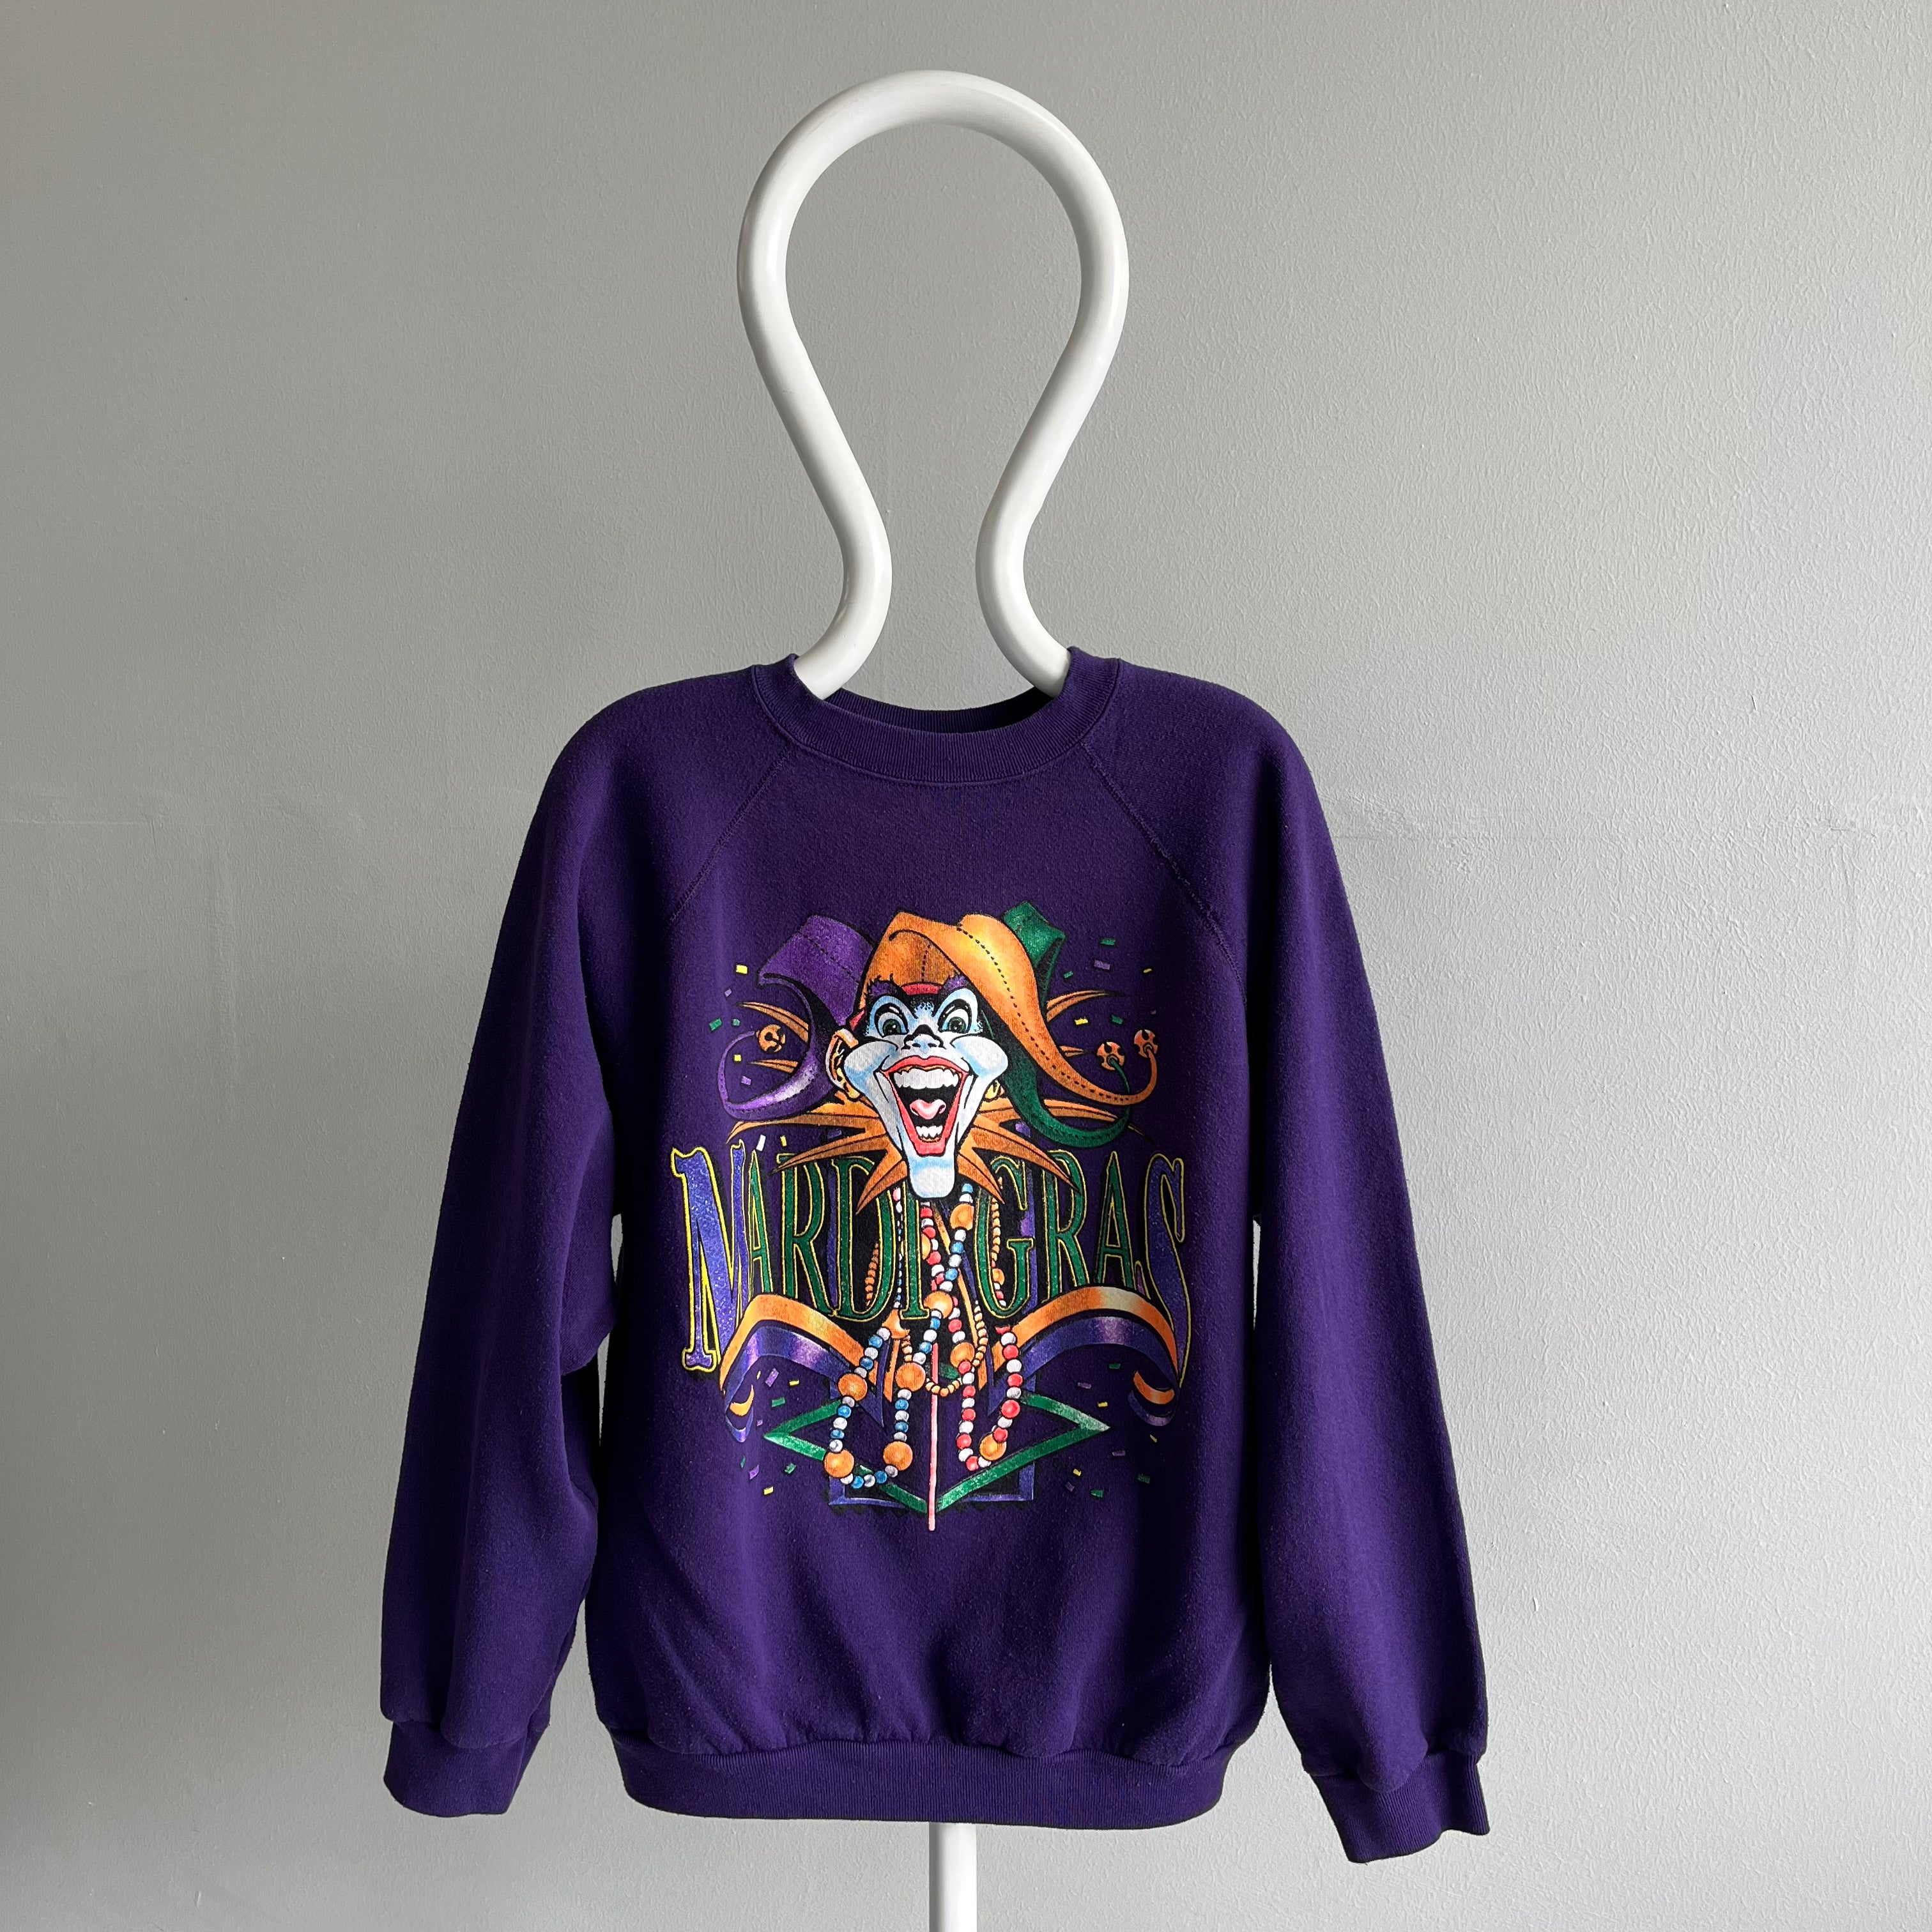 1990s Mardi Gras Graphic Sweatshirt by Tultex